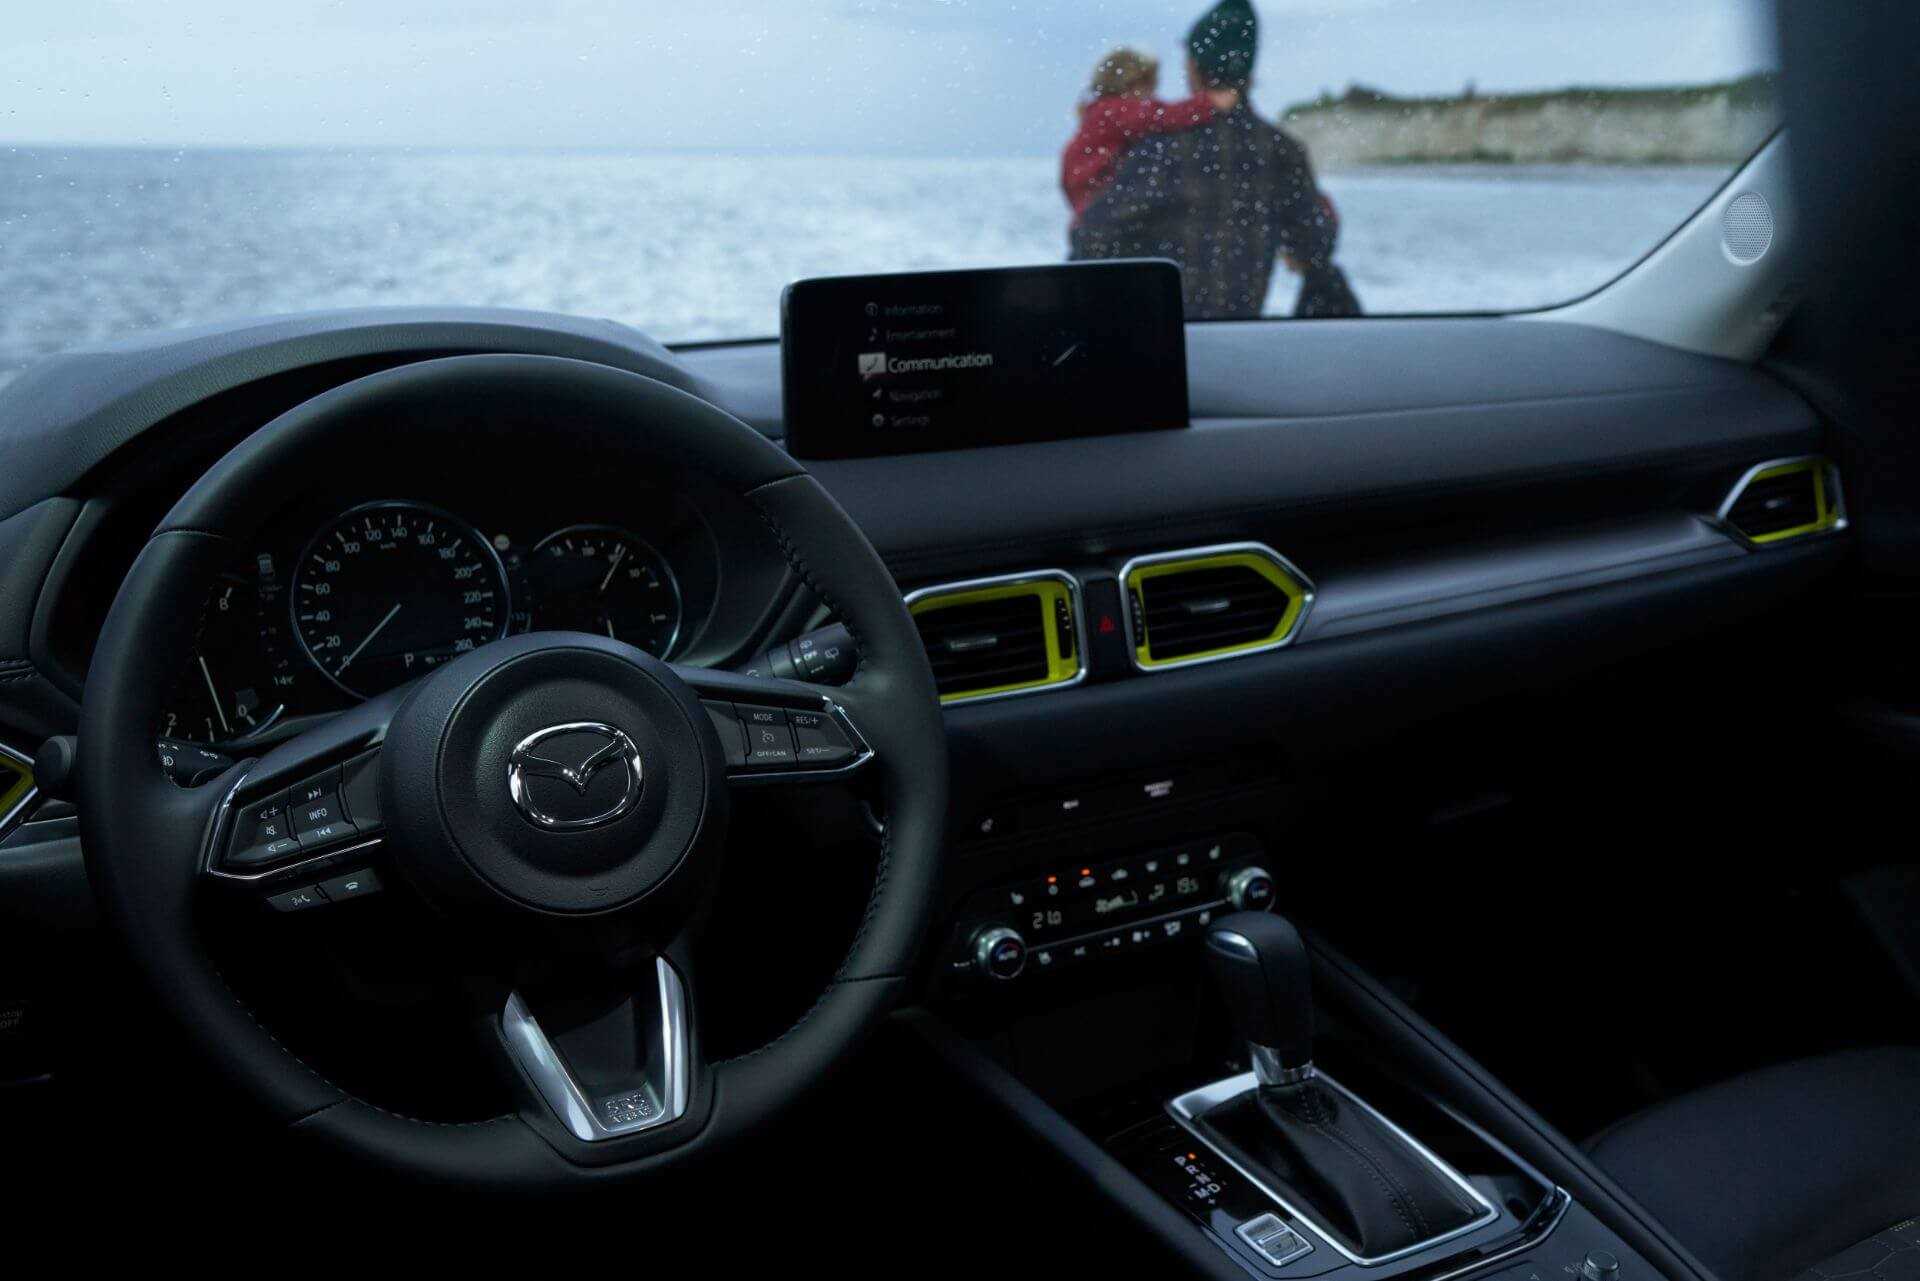 Khoang ca bin sang trọng của Mazda CX-5 2022 